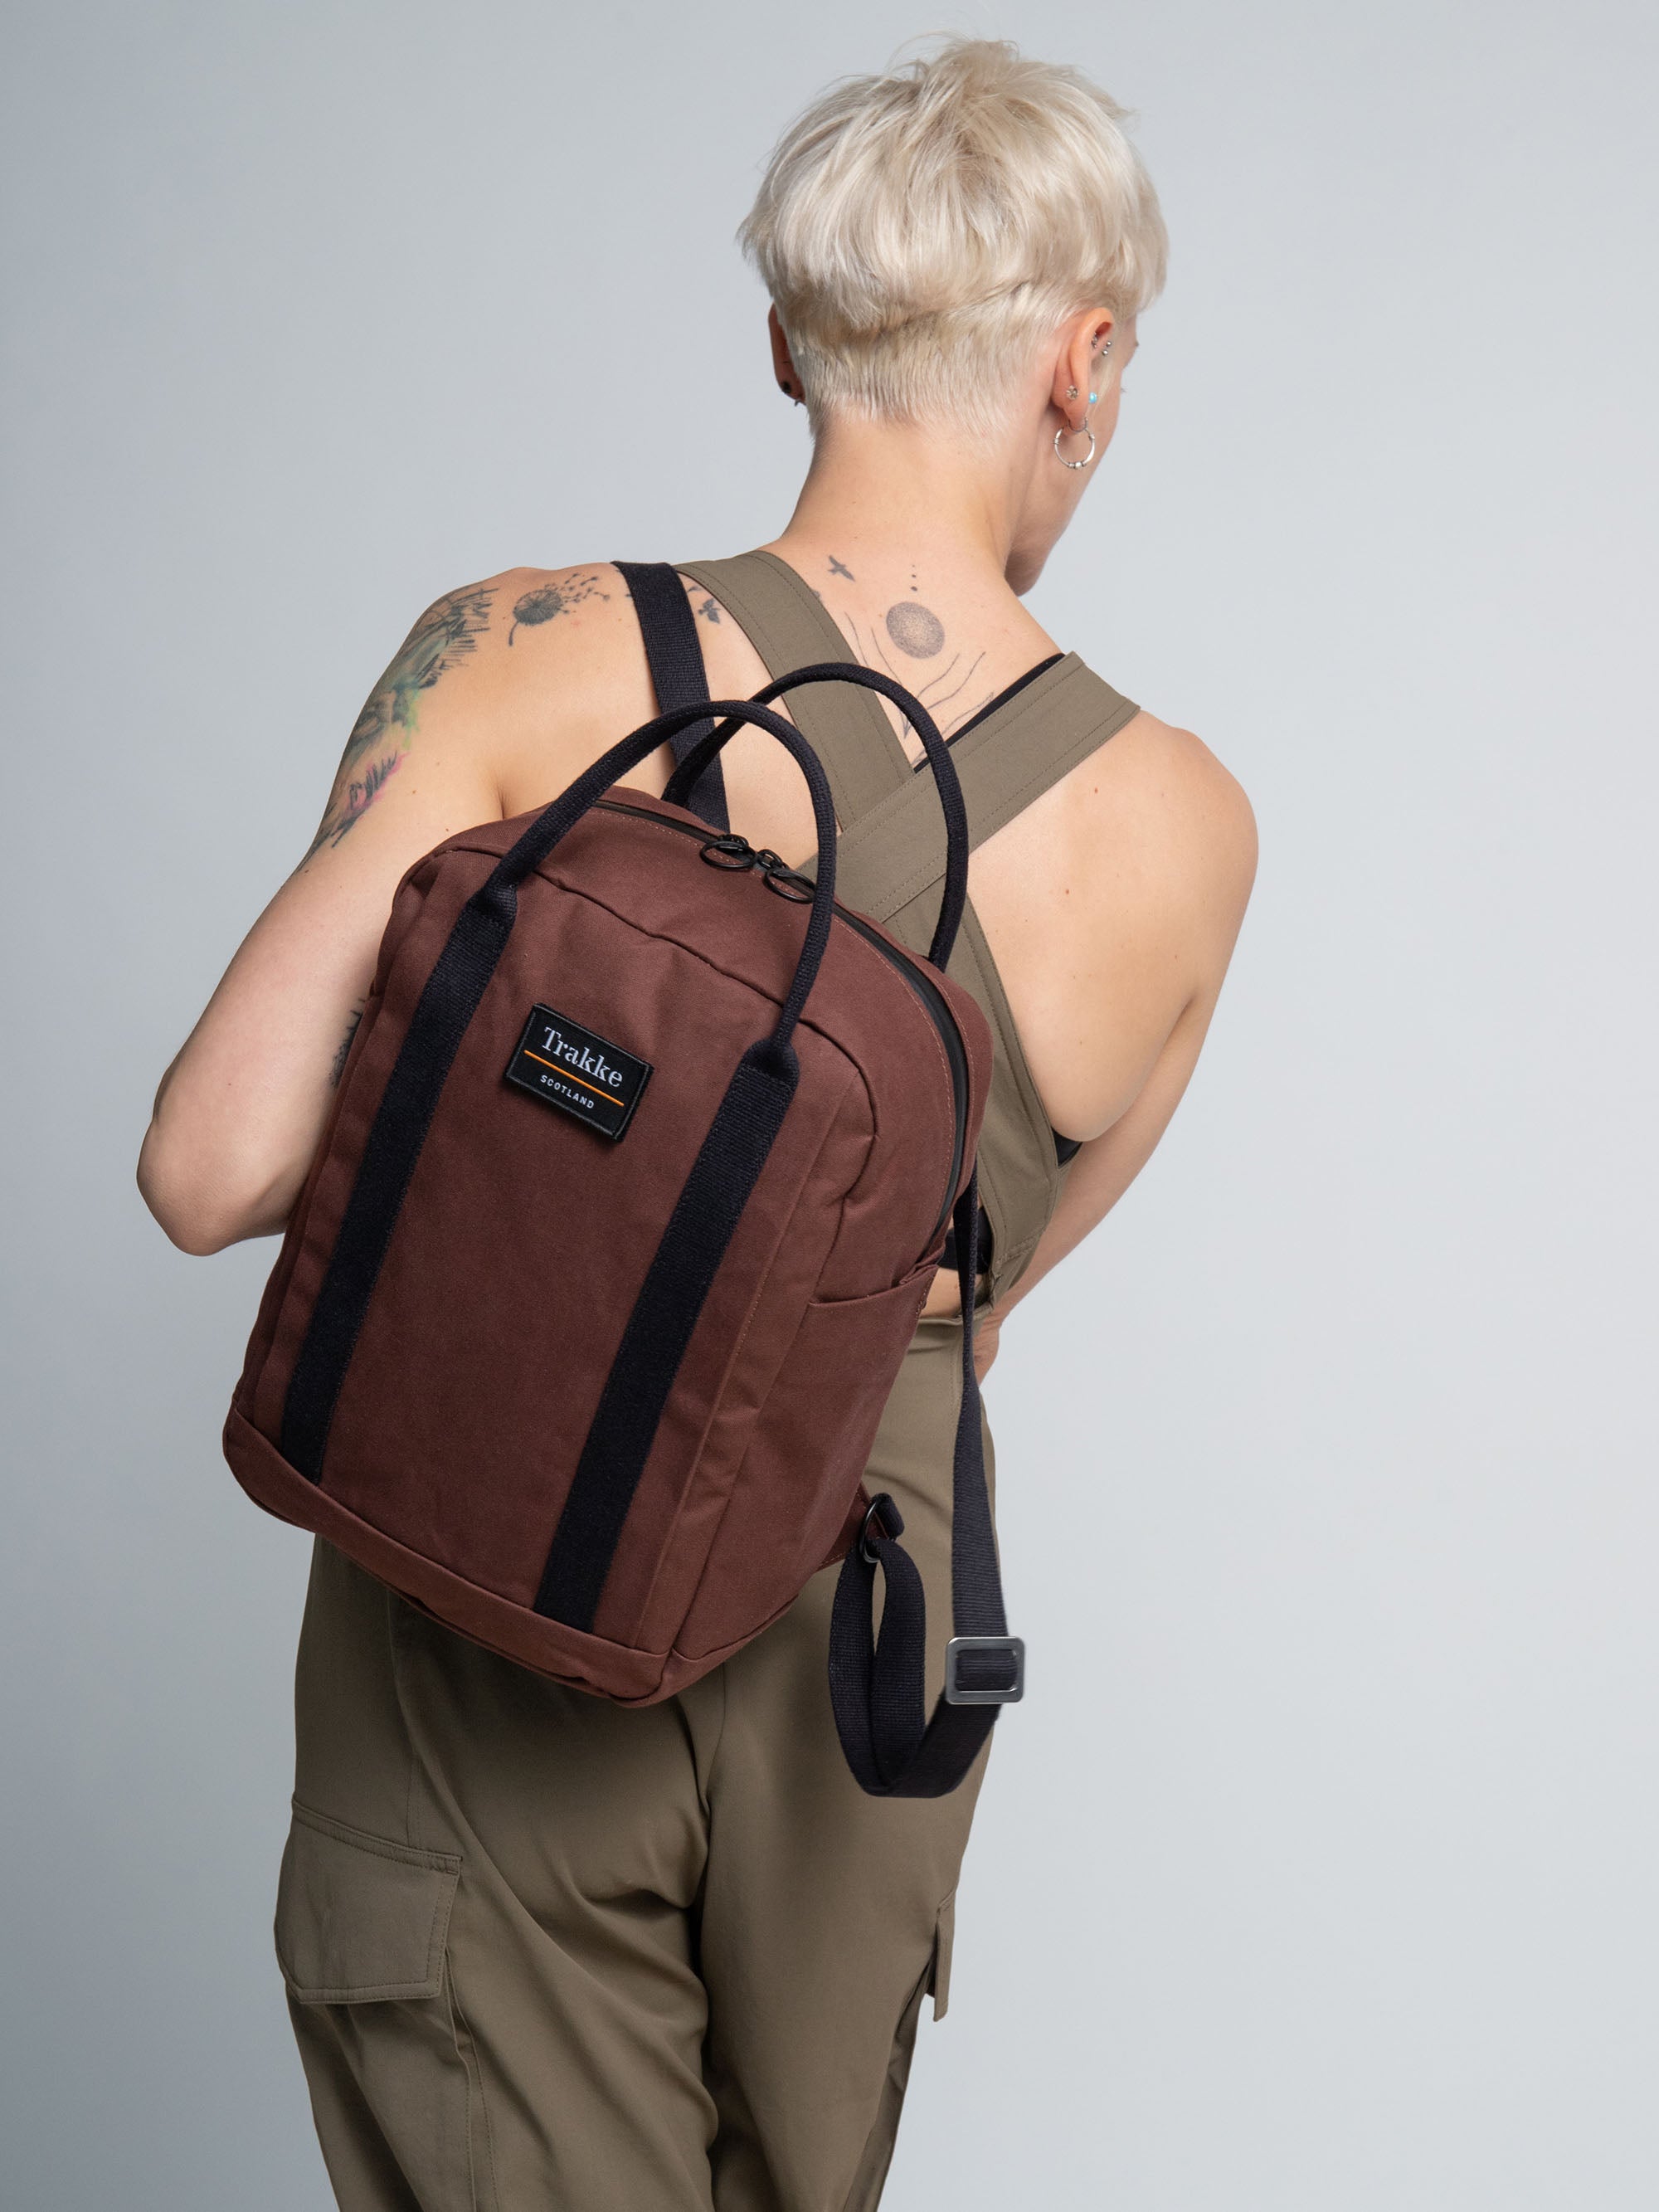 Trakke Storr Carry-On Backpack Review | Pack Hacker